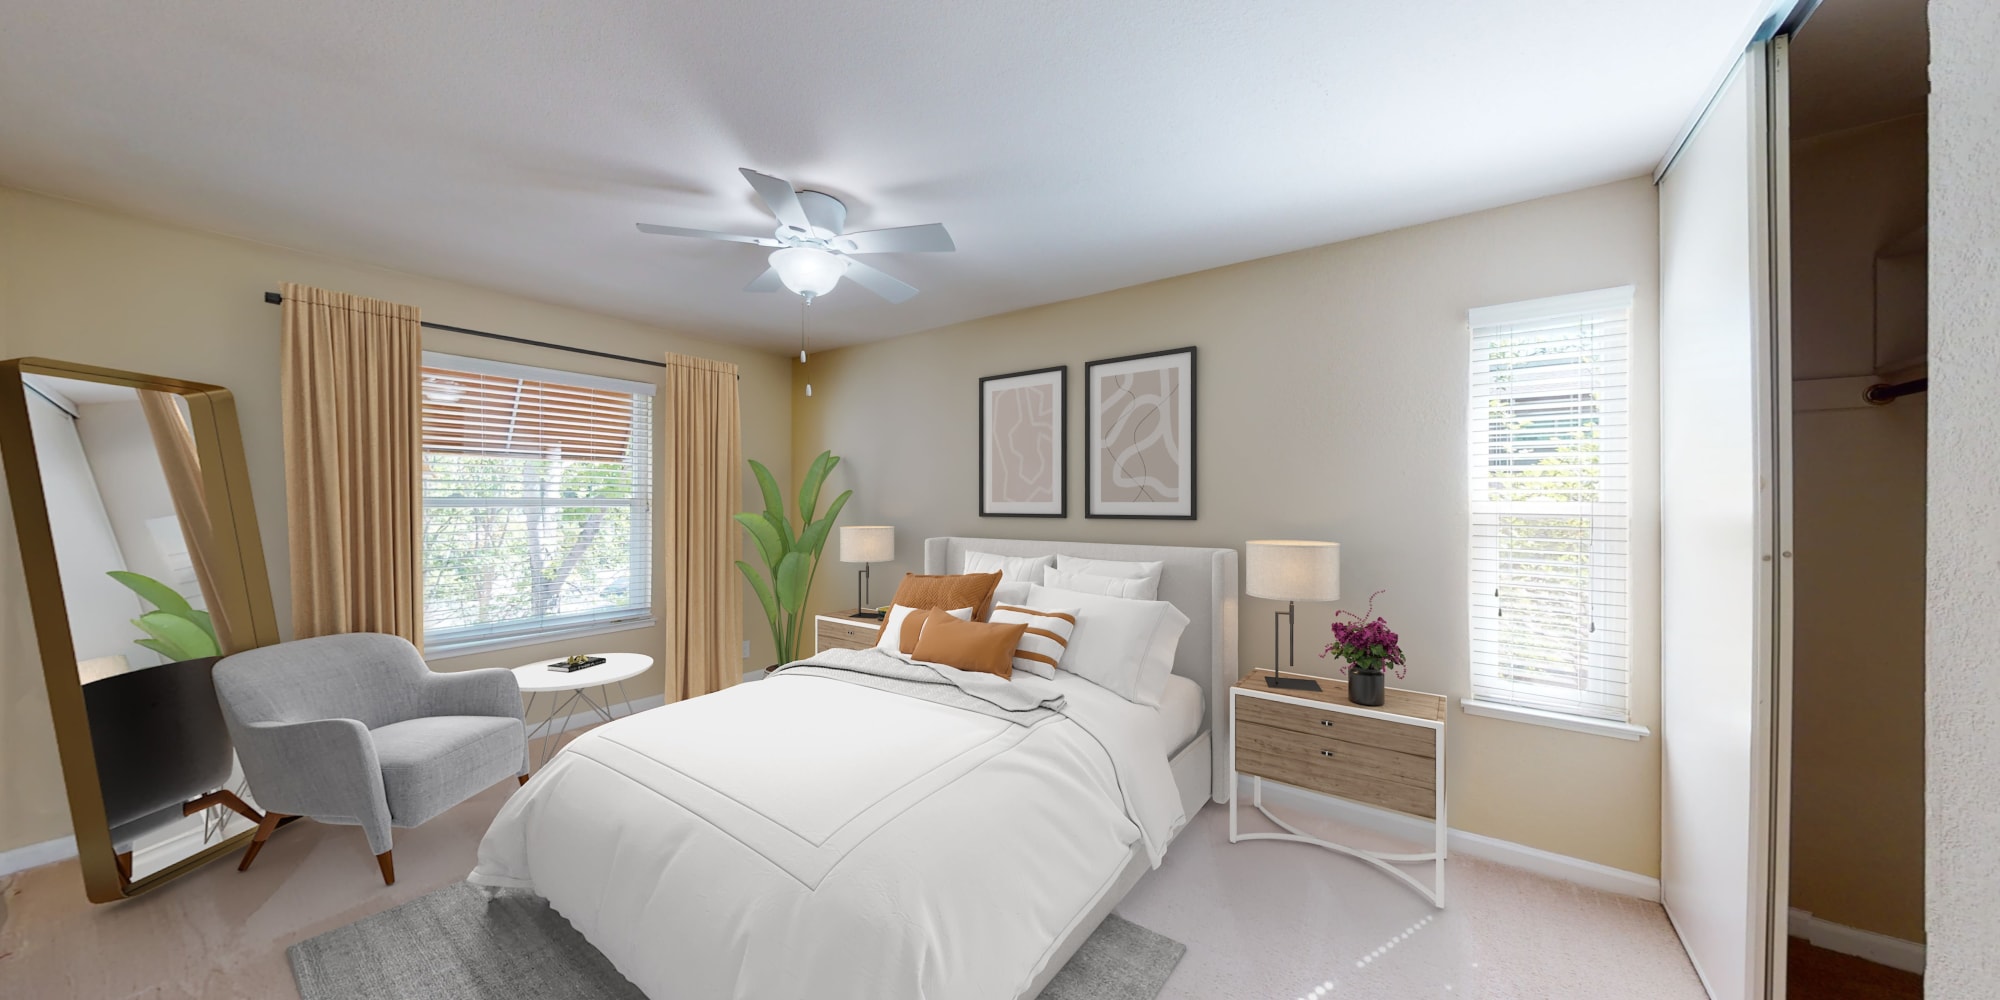 Two-bedroom apartment's bedroom at Valley Plaza Villages in Pleasanton, California